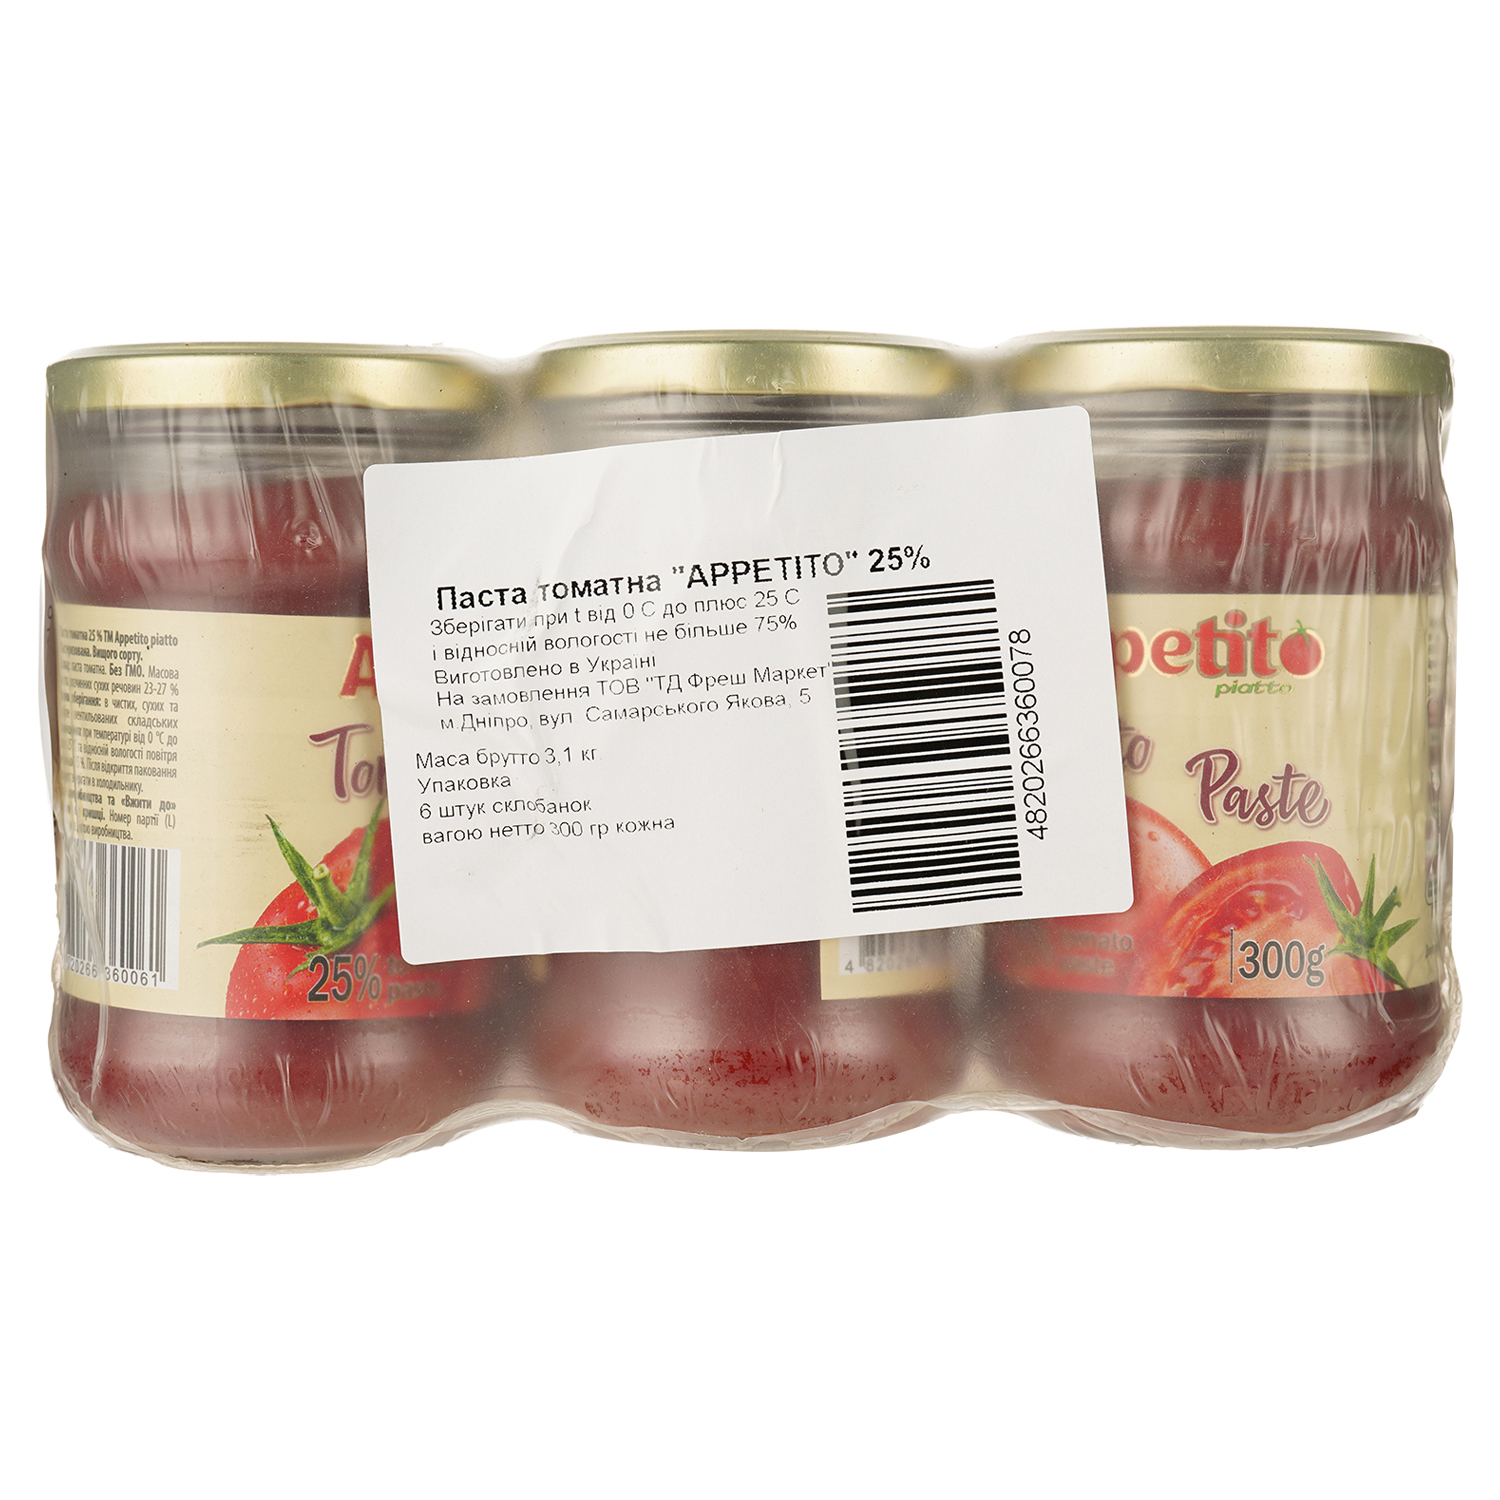 Паста томатная Appetito Piatto 1.8 кг (6 шт. х 300 г) - фото 3